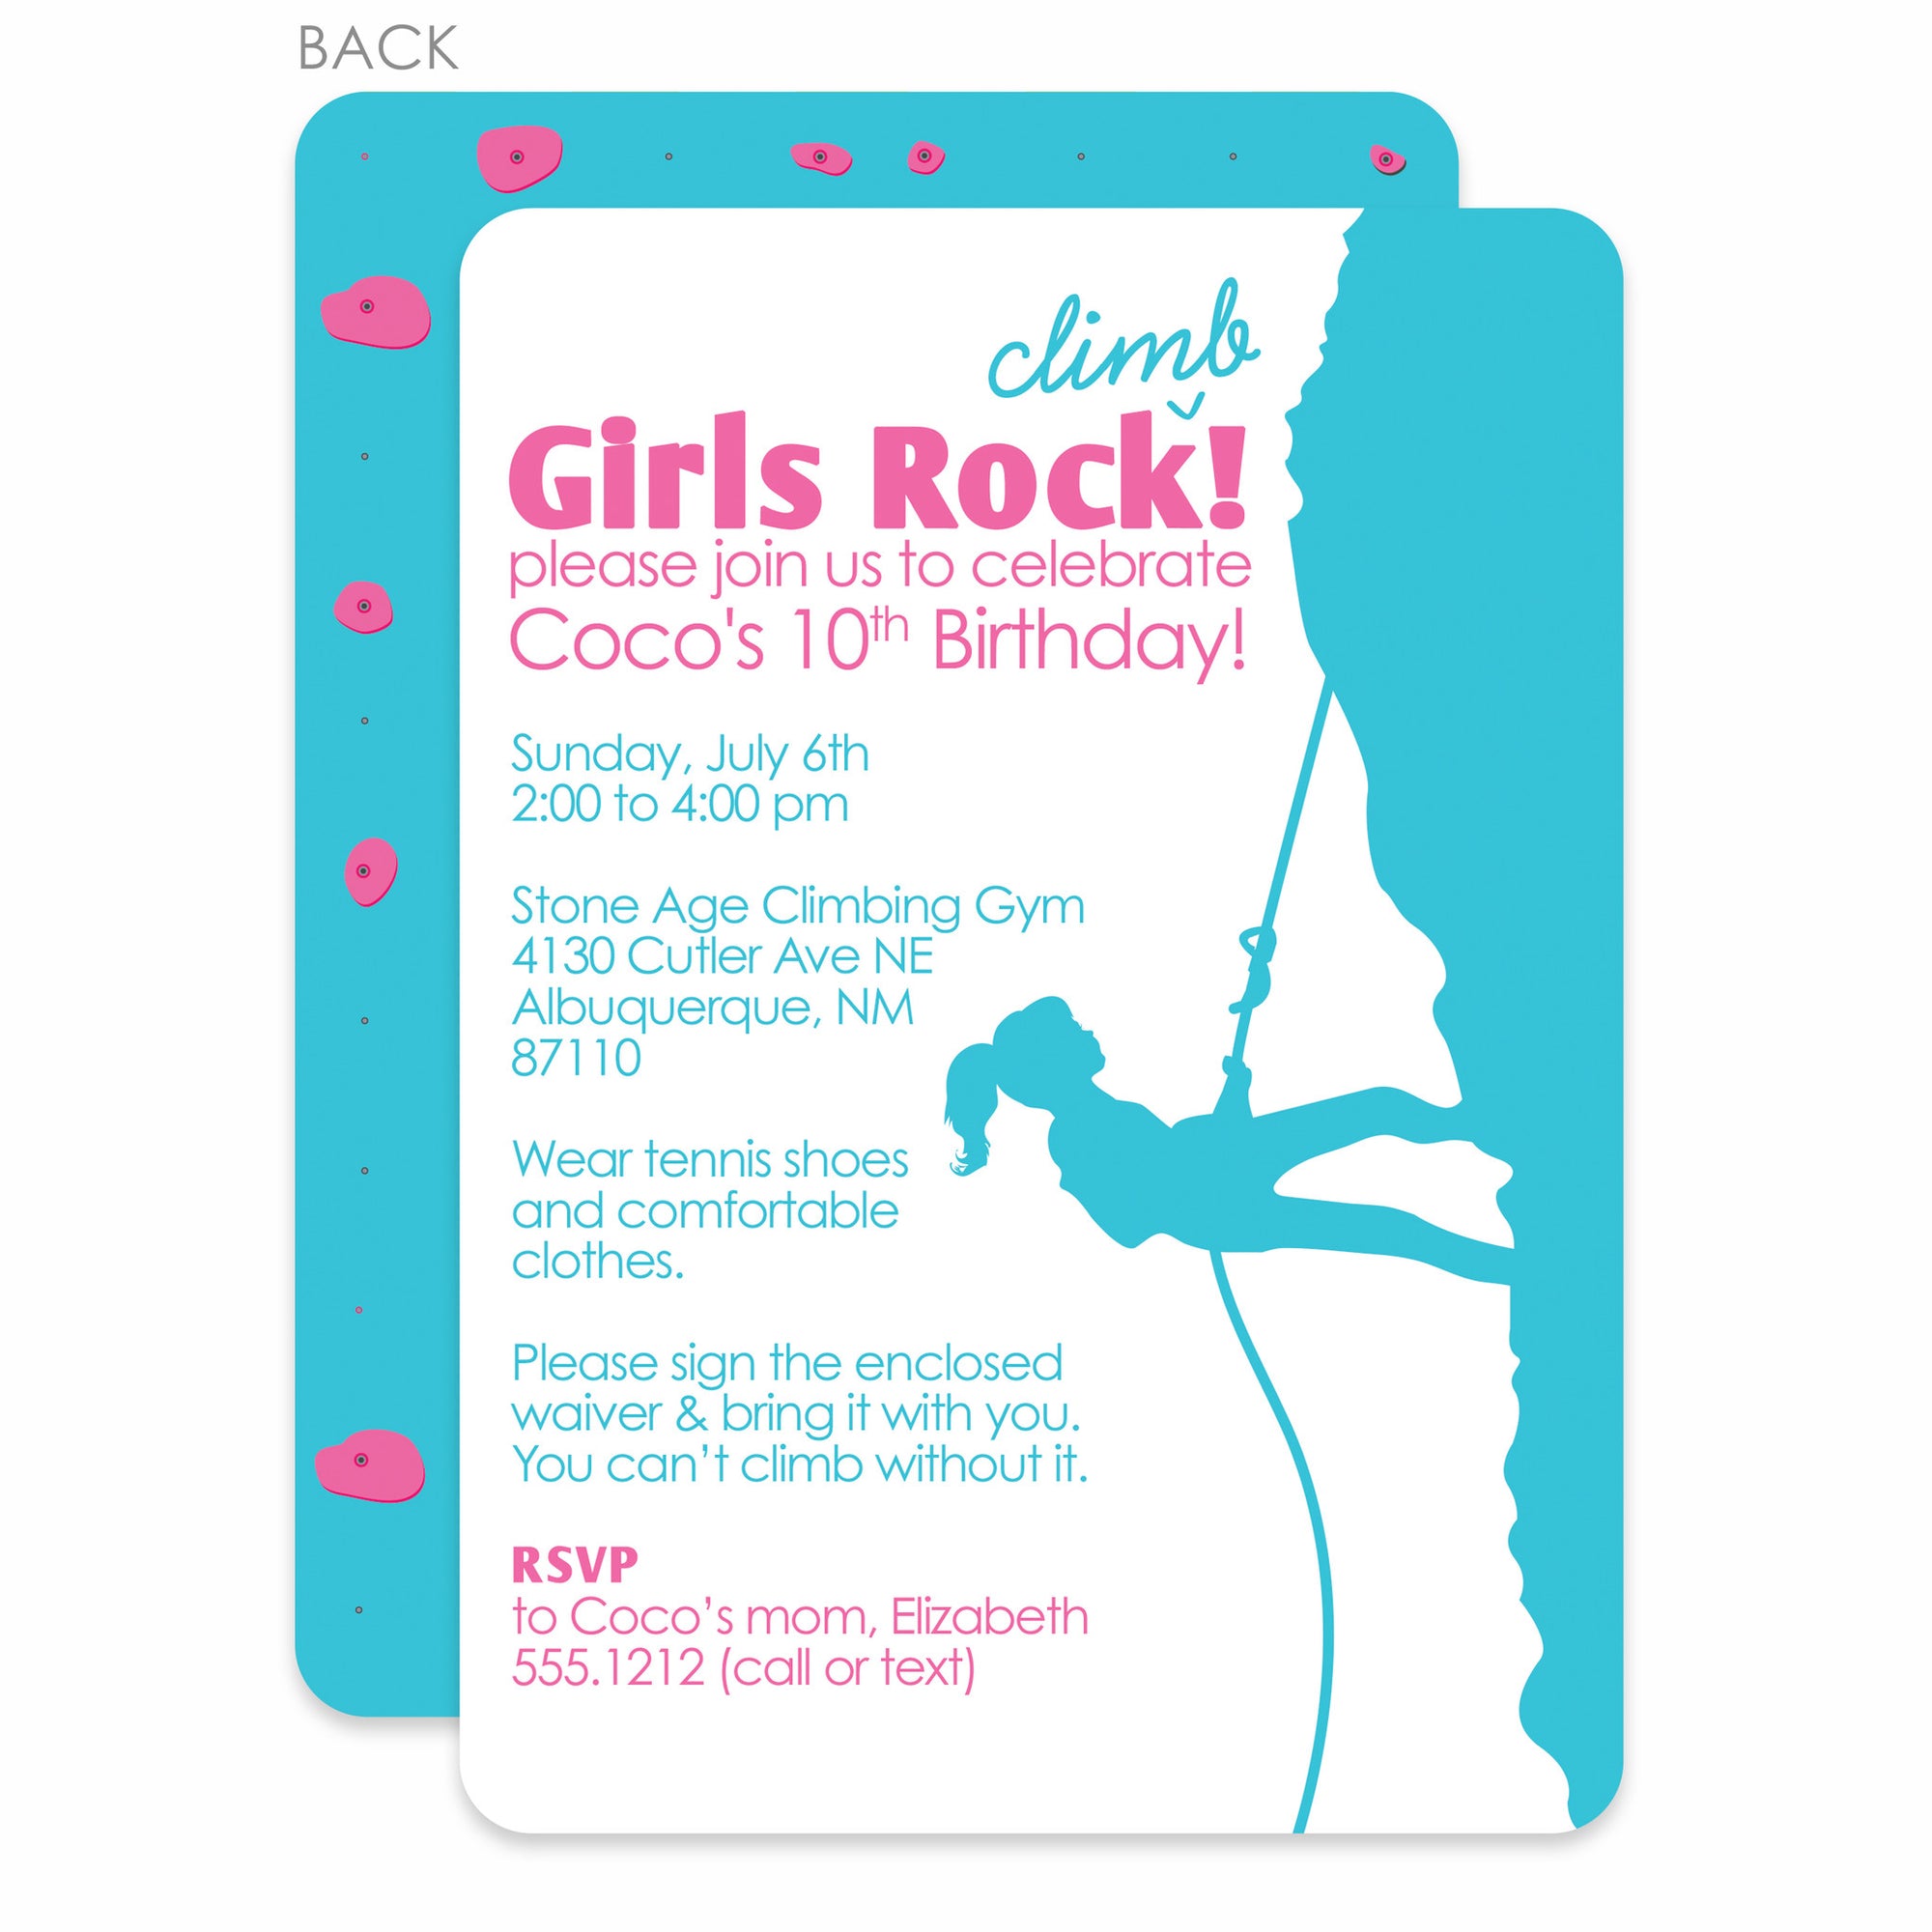 Rock Climbing Girl Birthday Invitation, girls rock! Printed on premium heavyweight cardstock. Pipsy.com